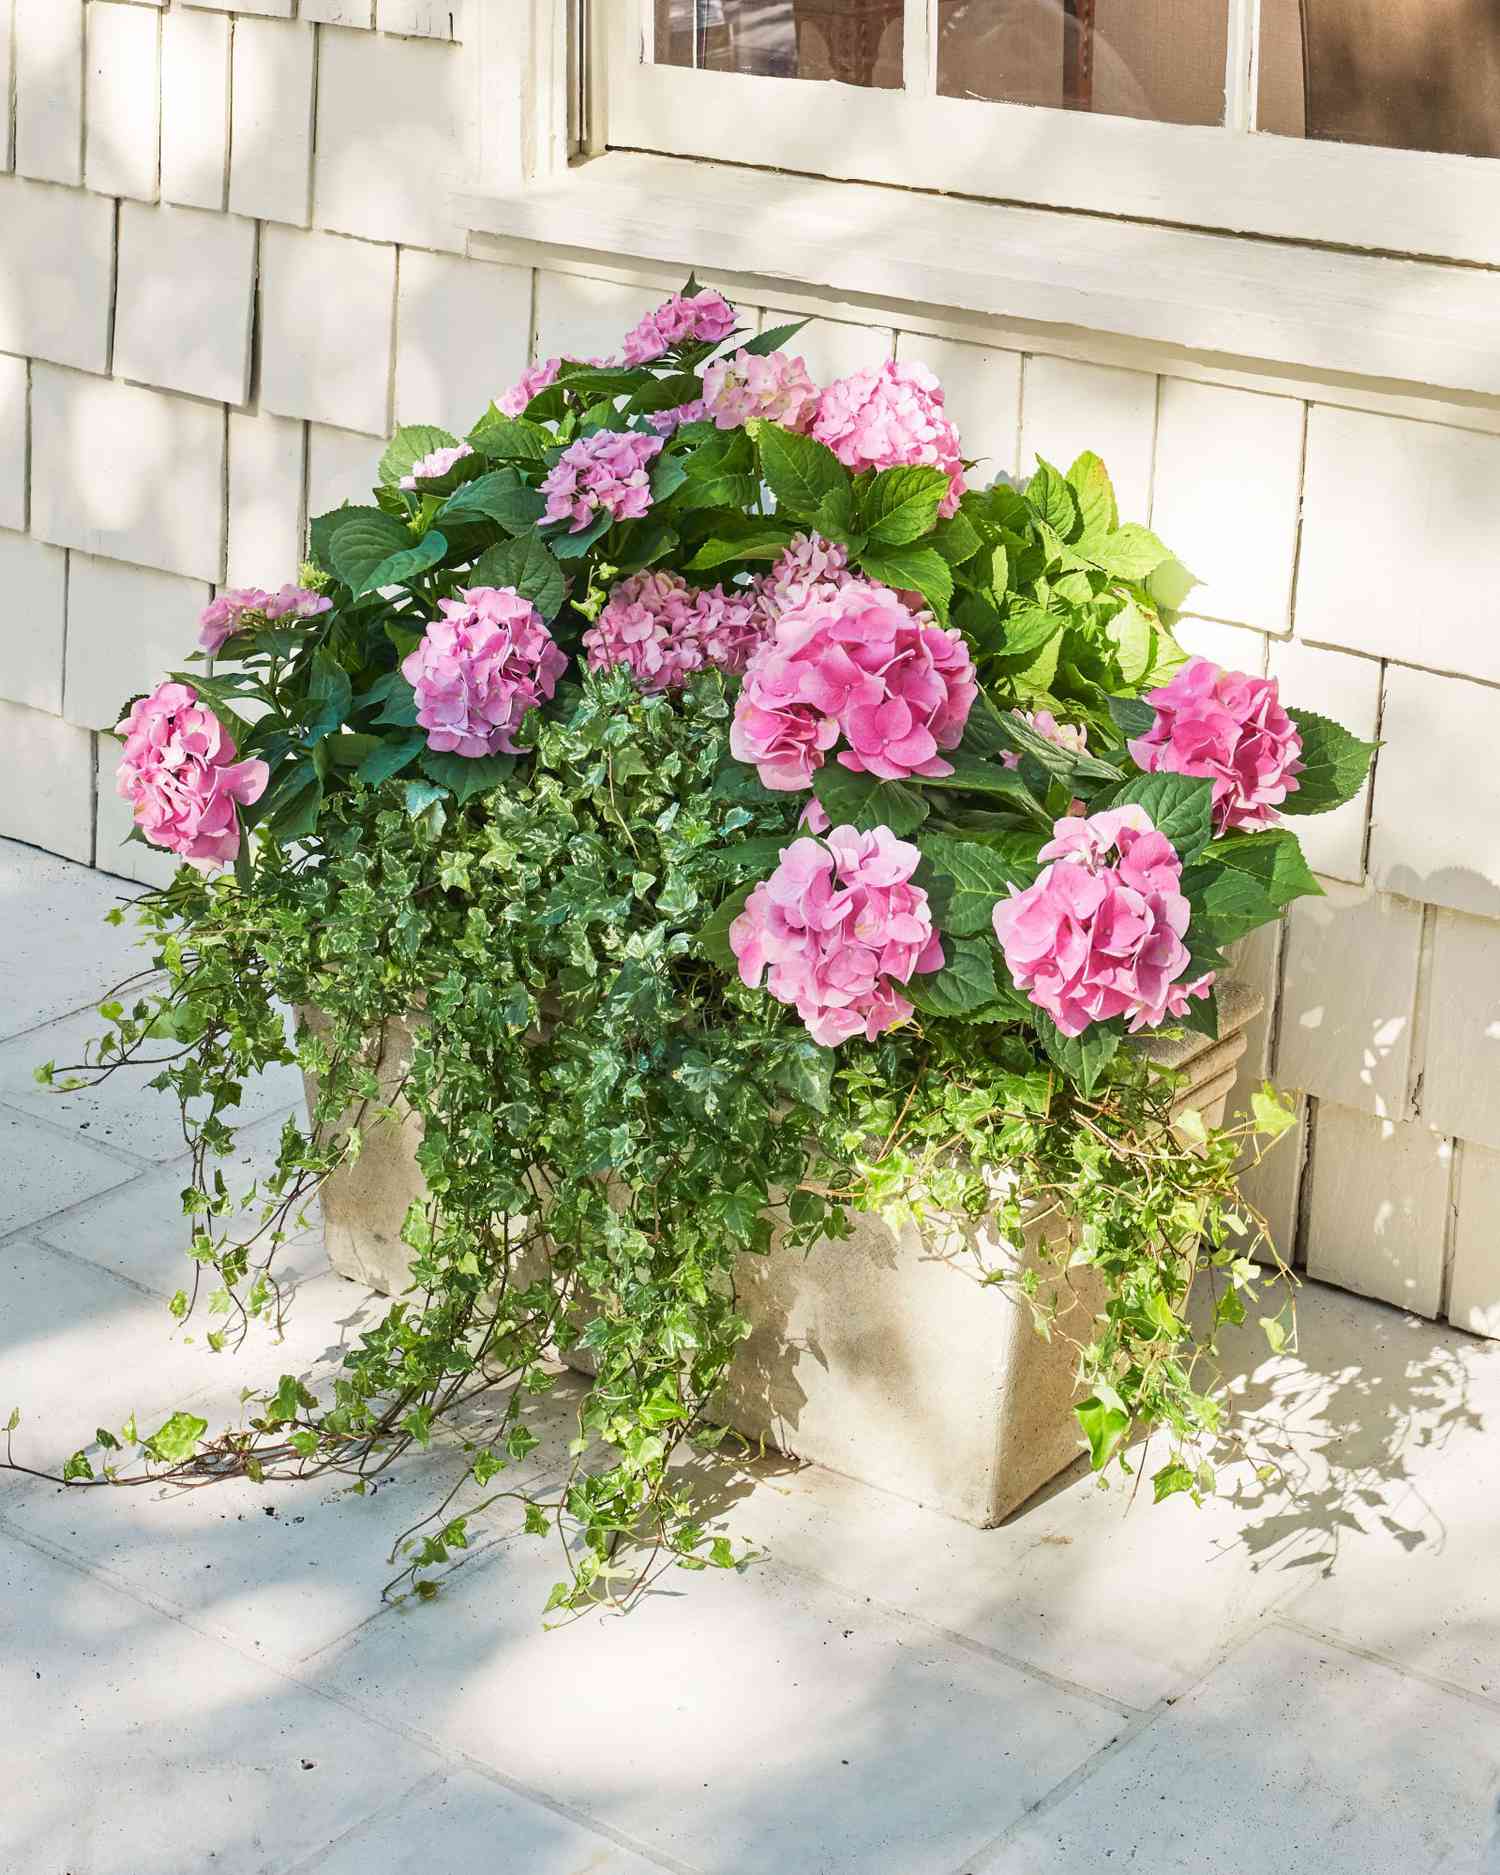 Rosa fransk hortensia i beholder med engelsk eføy